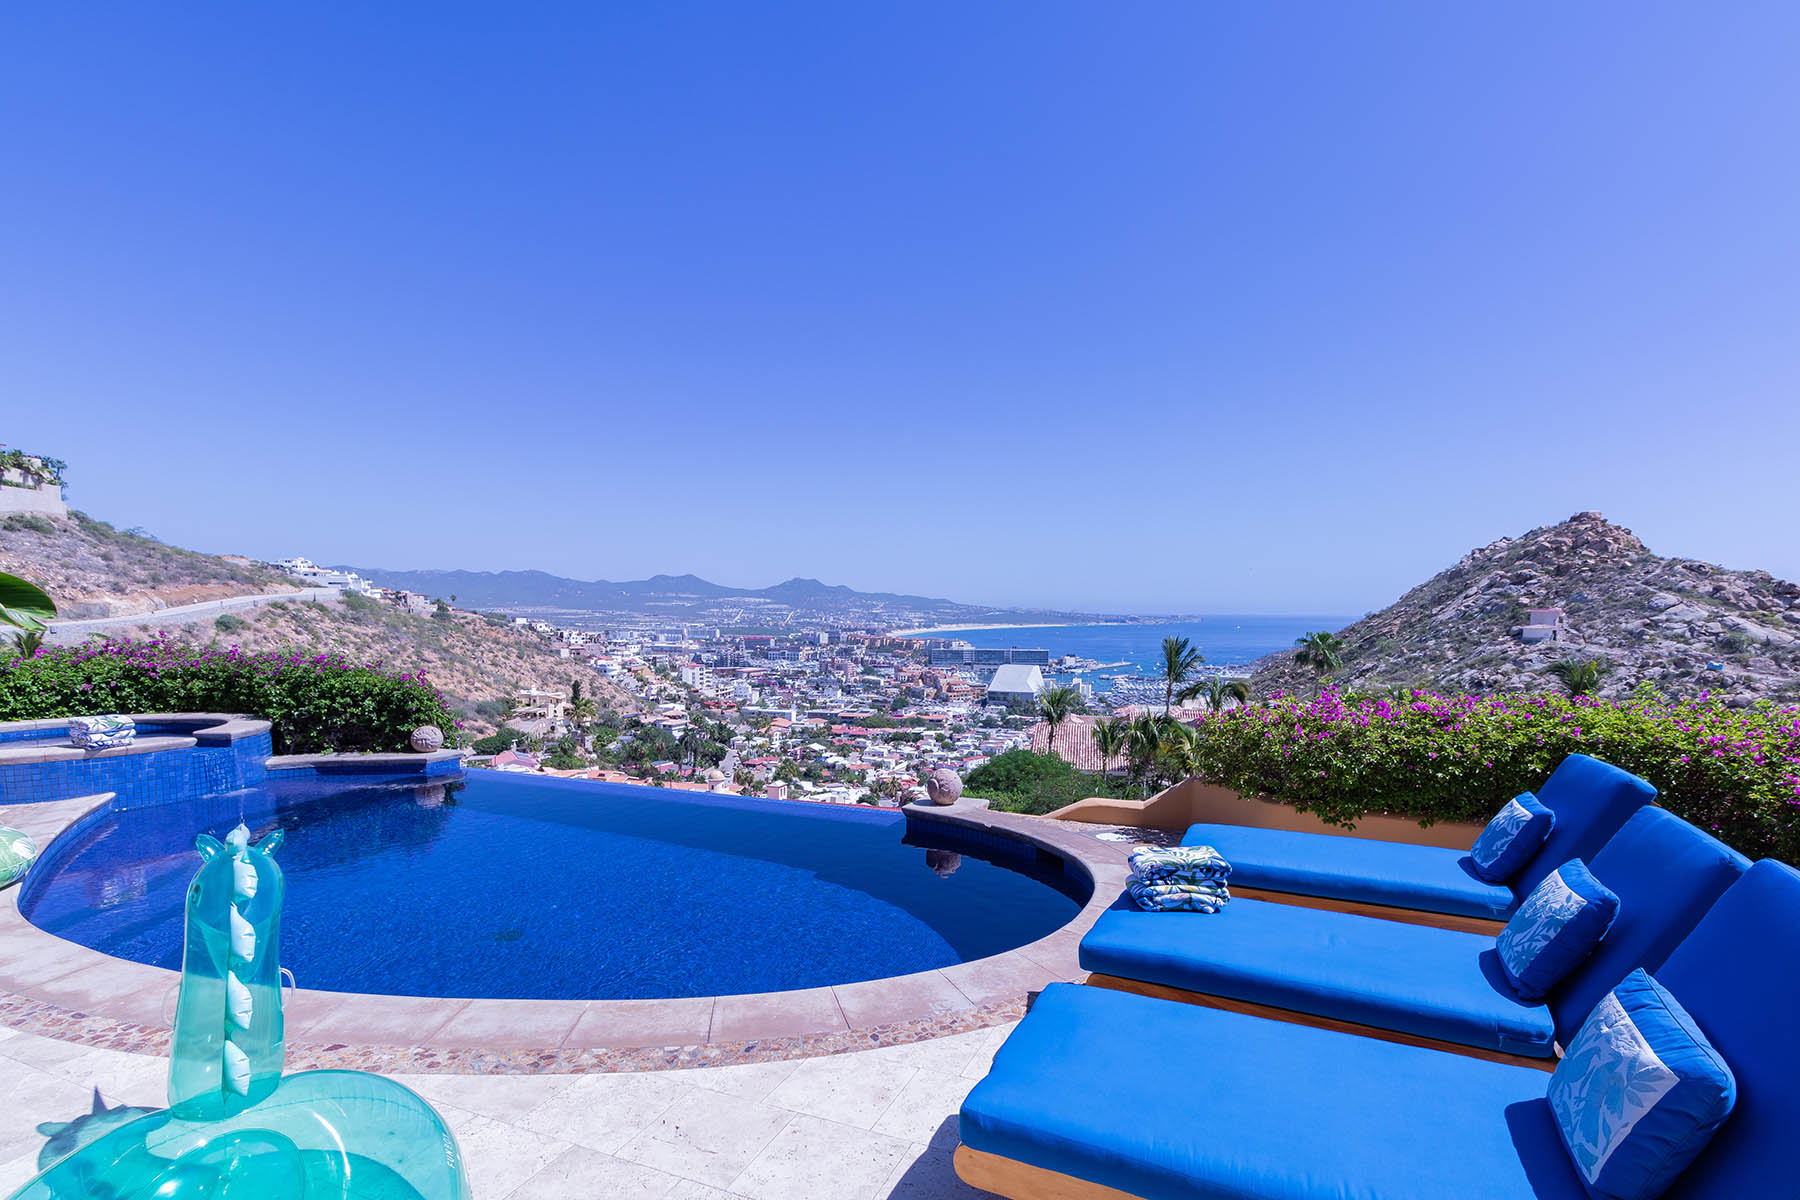 Pool overlooking Cabo bay at Casa Santa Fe Vacation Rental in Cabo Mexico